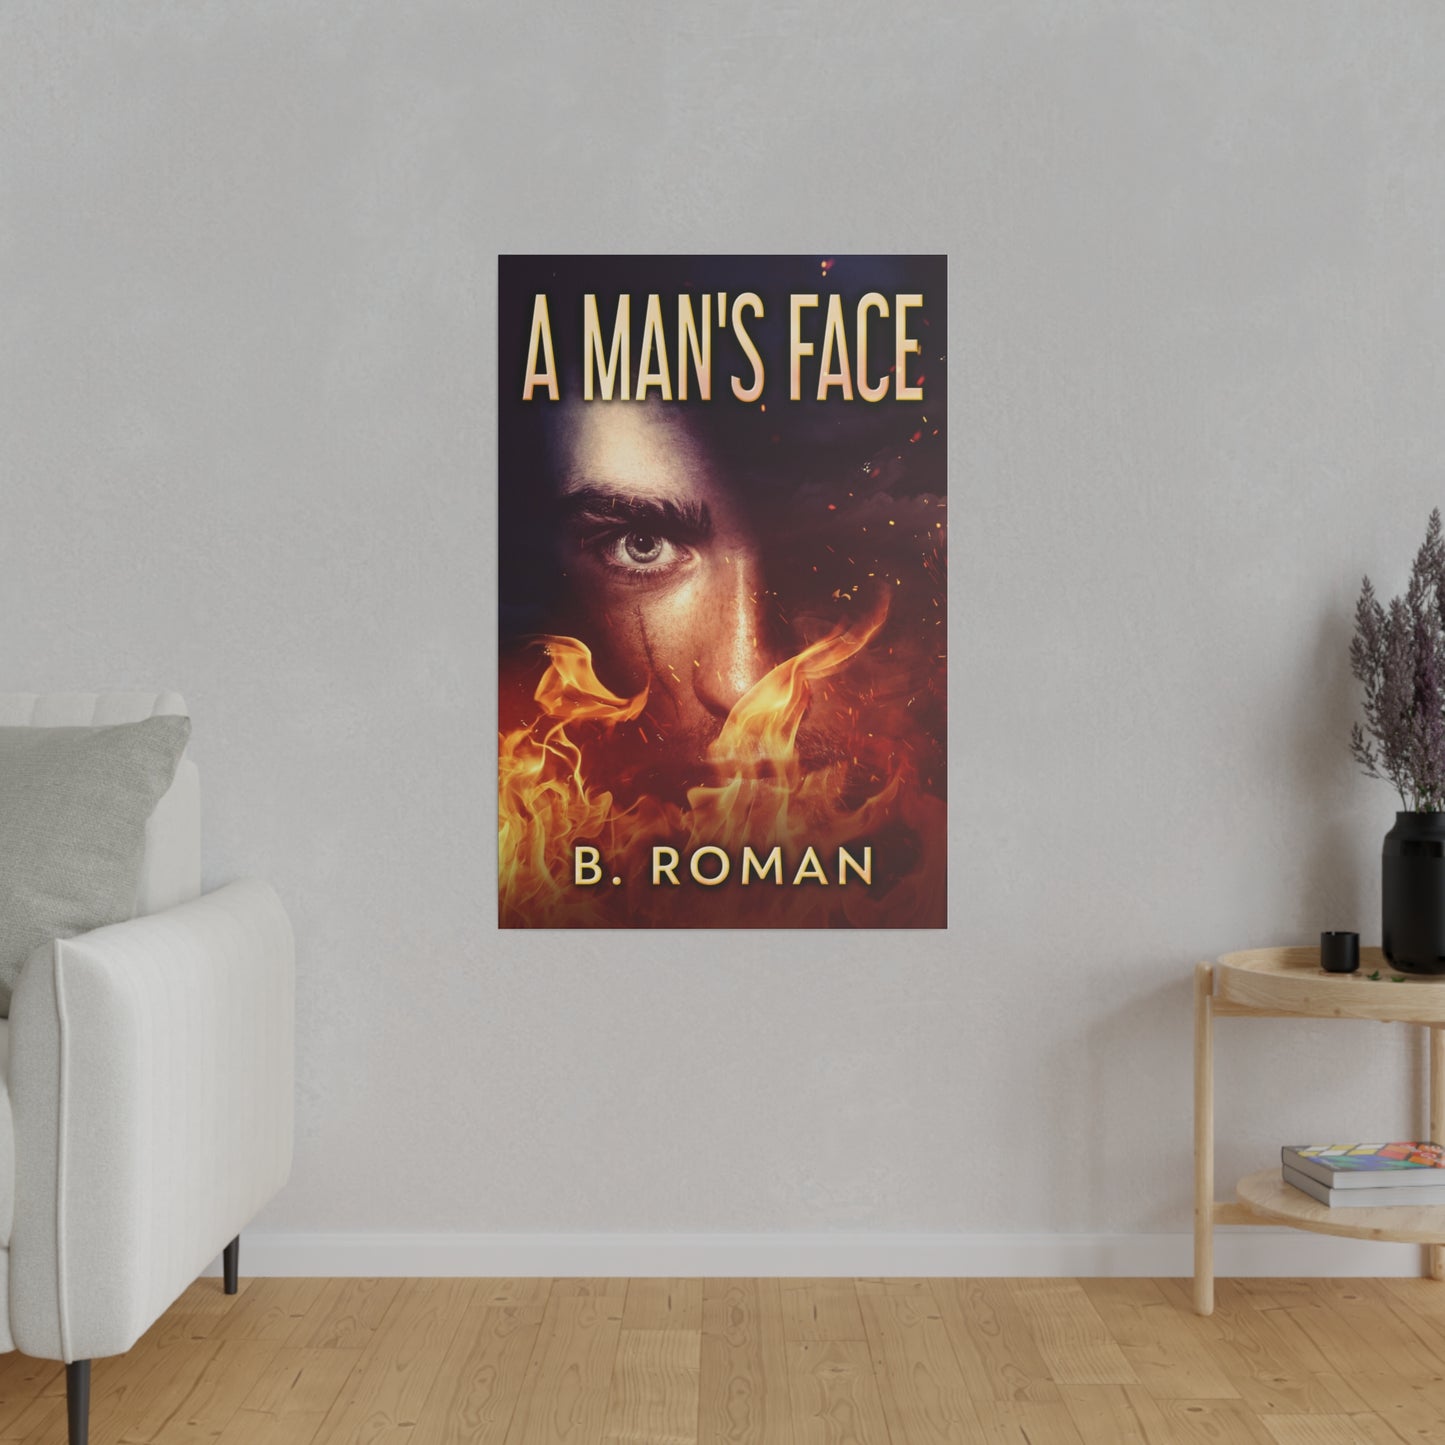 A Man's Face - Canvas